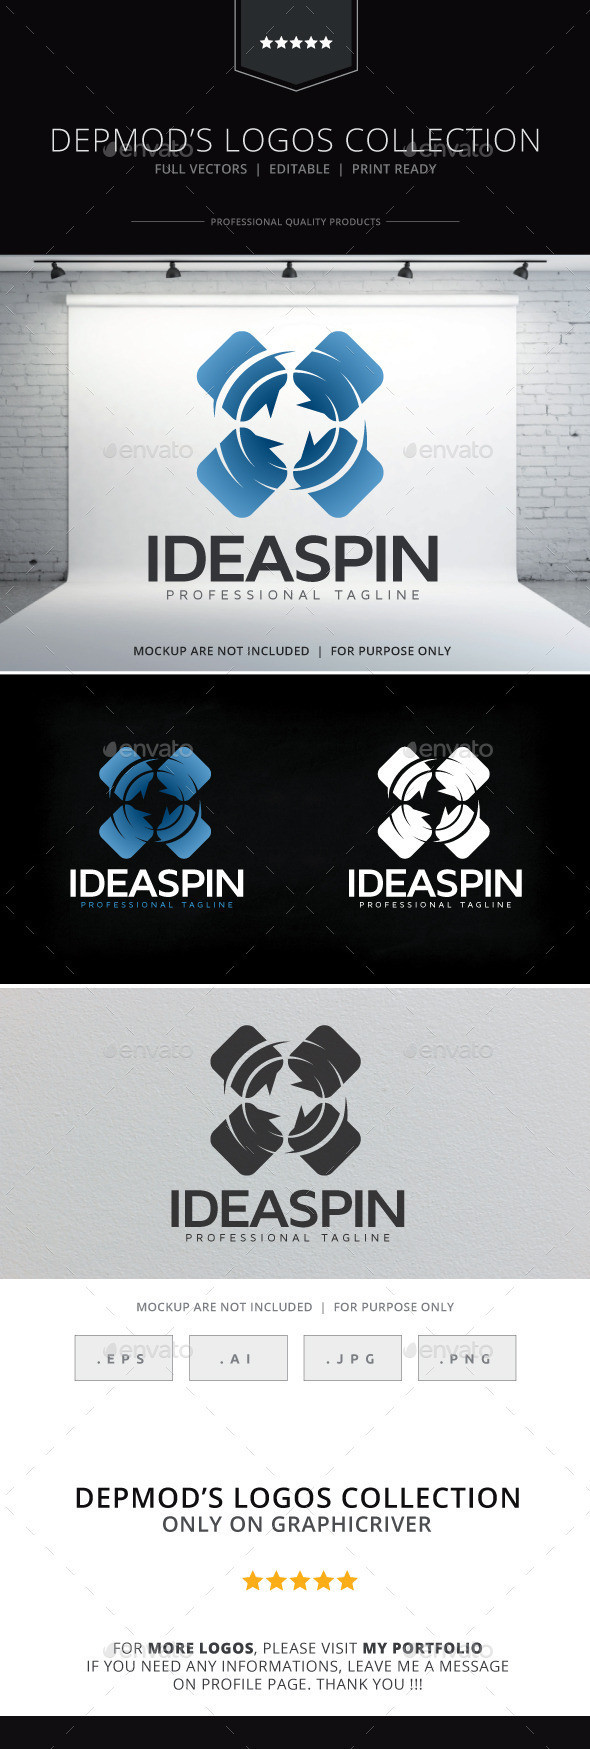 Idea spin logo